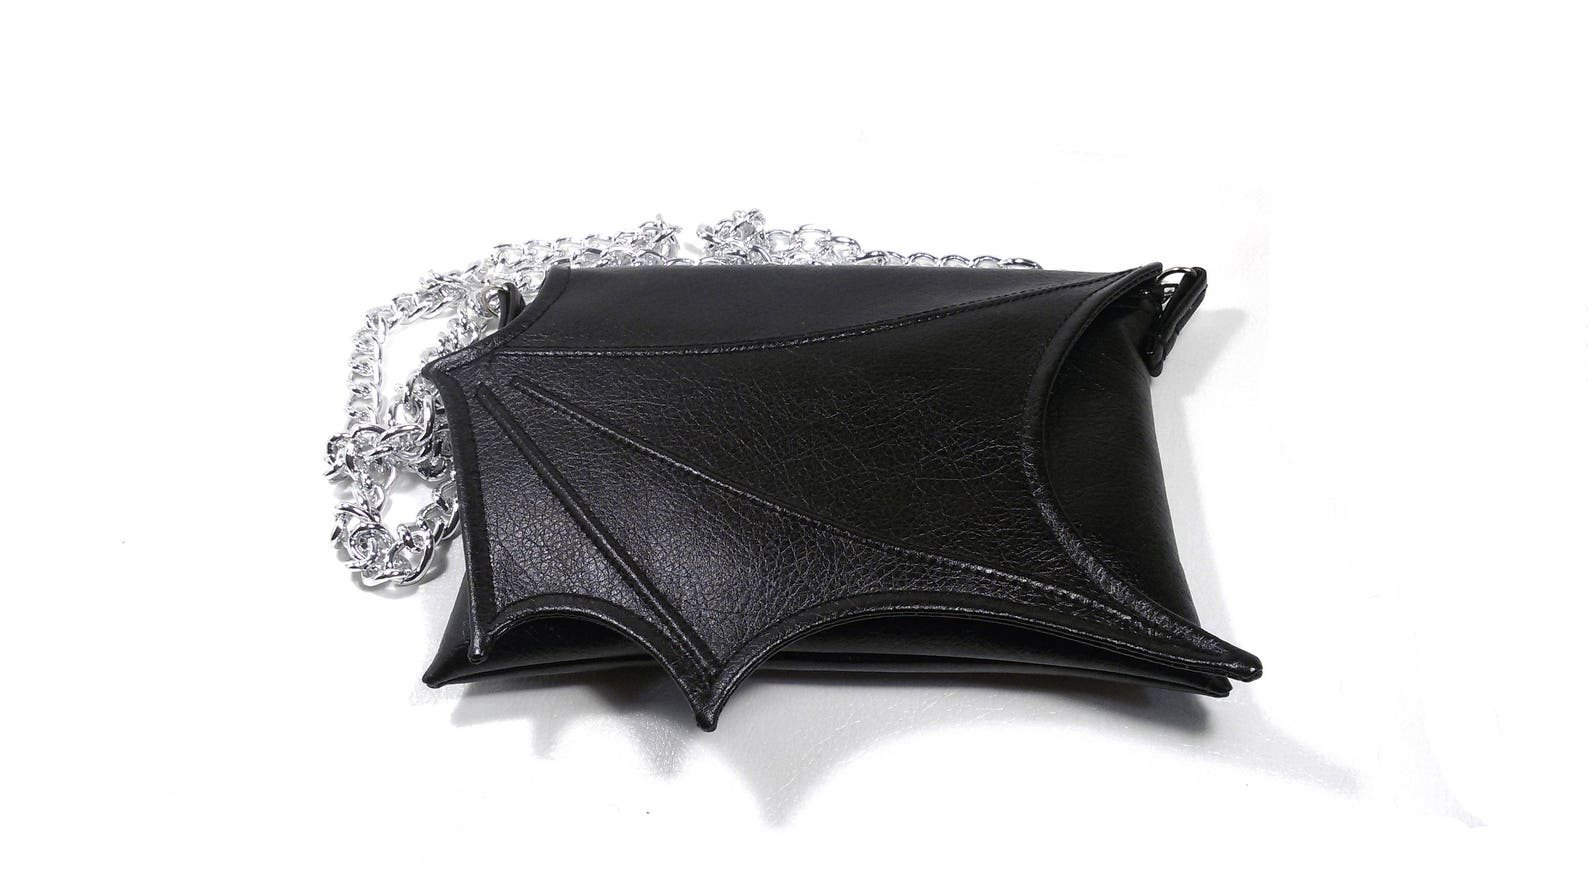 Black bat wing bag small crossbody bag black purse vegan | Etsy